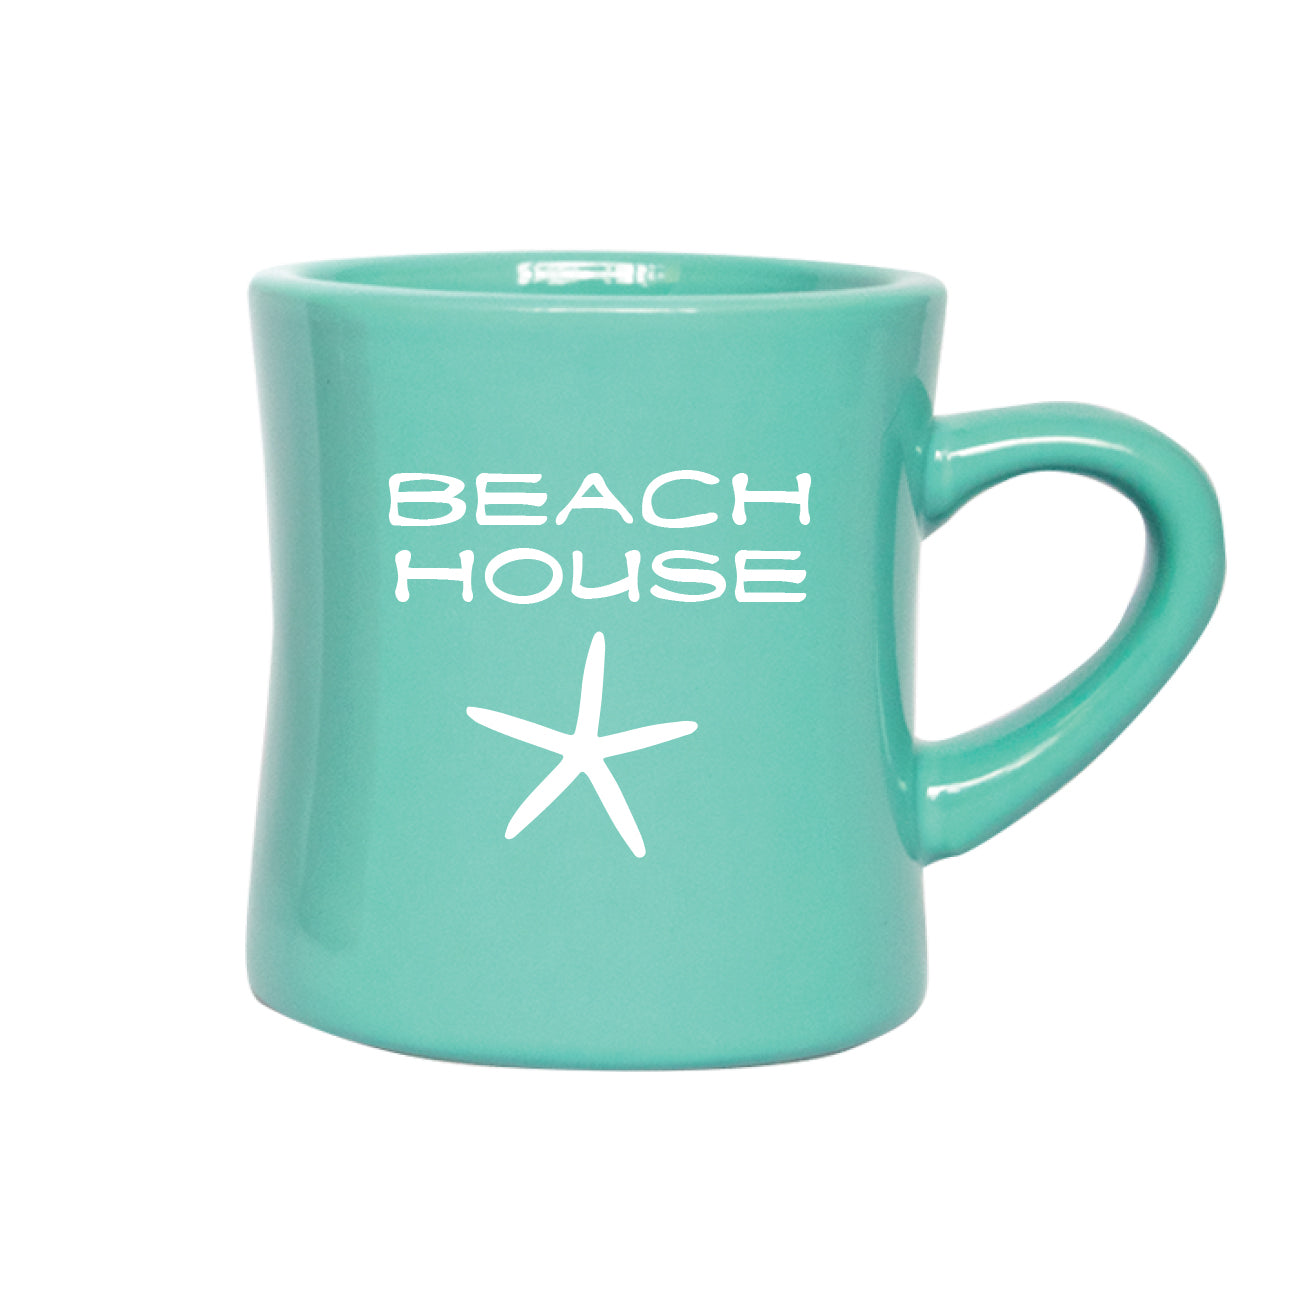 Beach House Diner Mug, printed Starfish, Sand Dollar